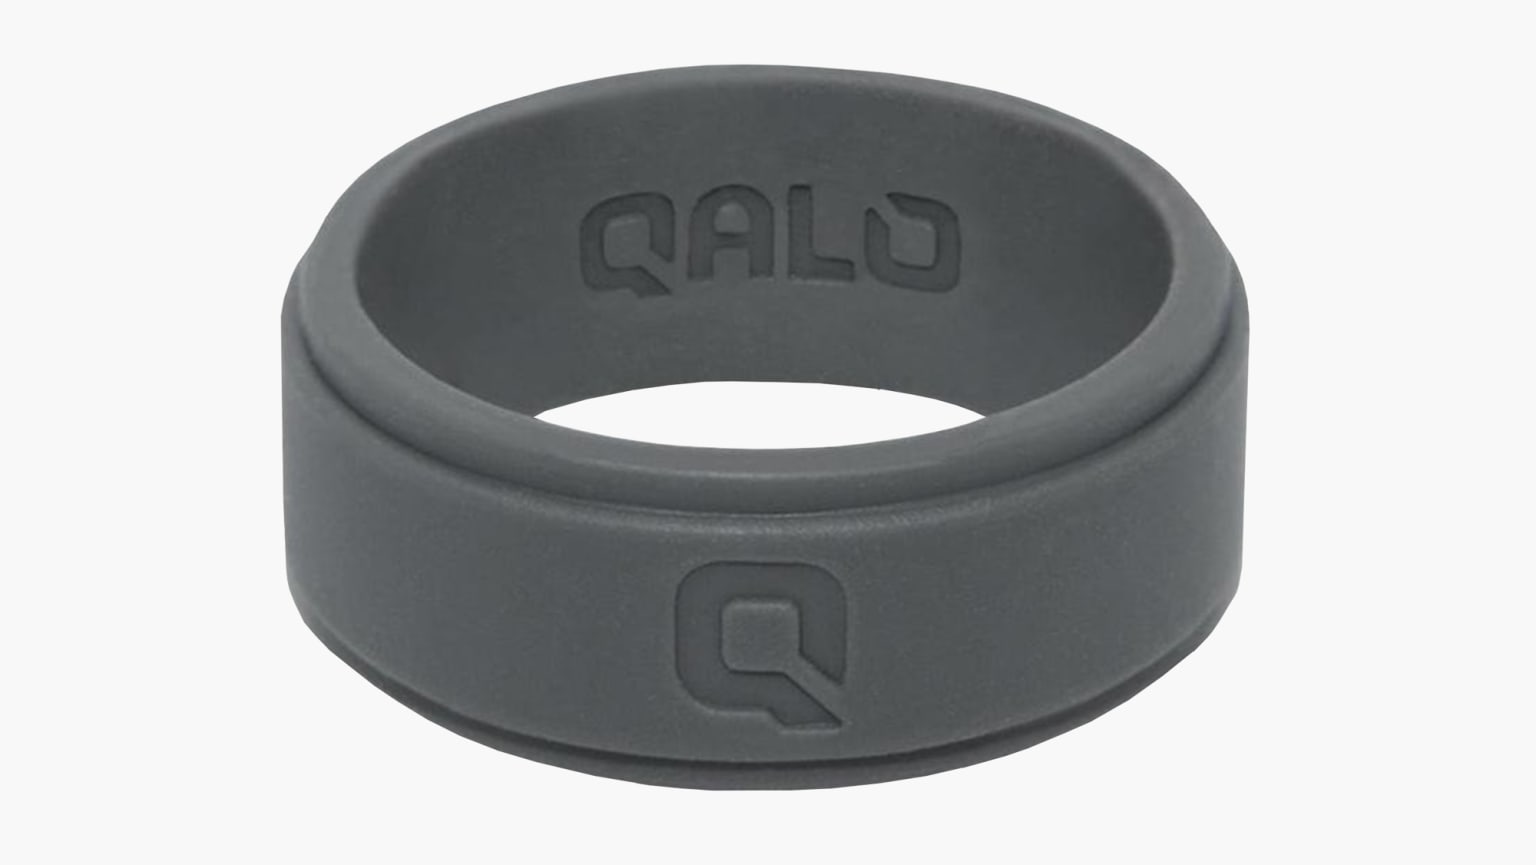 Qalo Men's Step Edge Q2X™ Silicone Ring